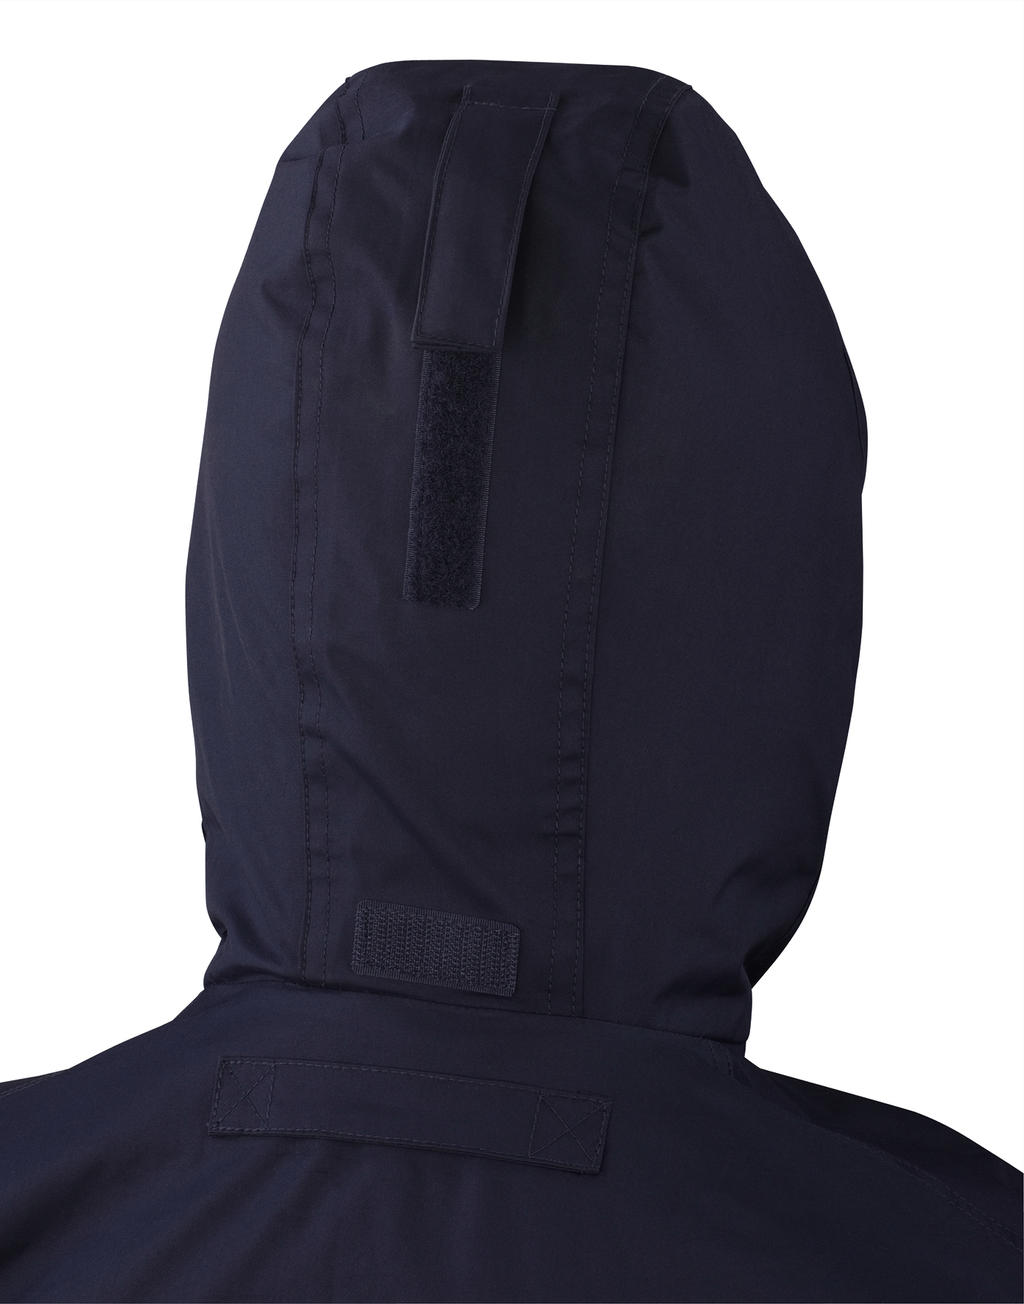  Junior Reversible Stormproof Jacket in Farbe Black/Grey